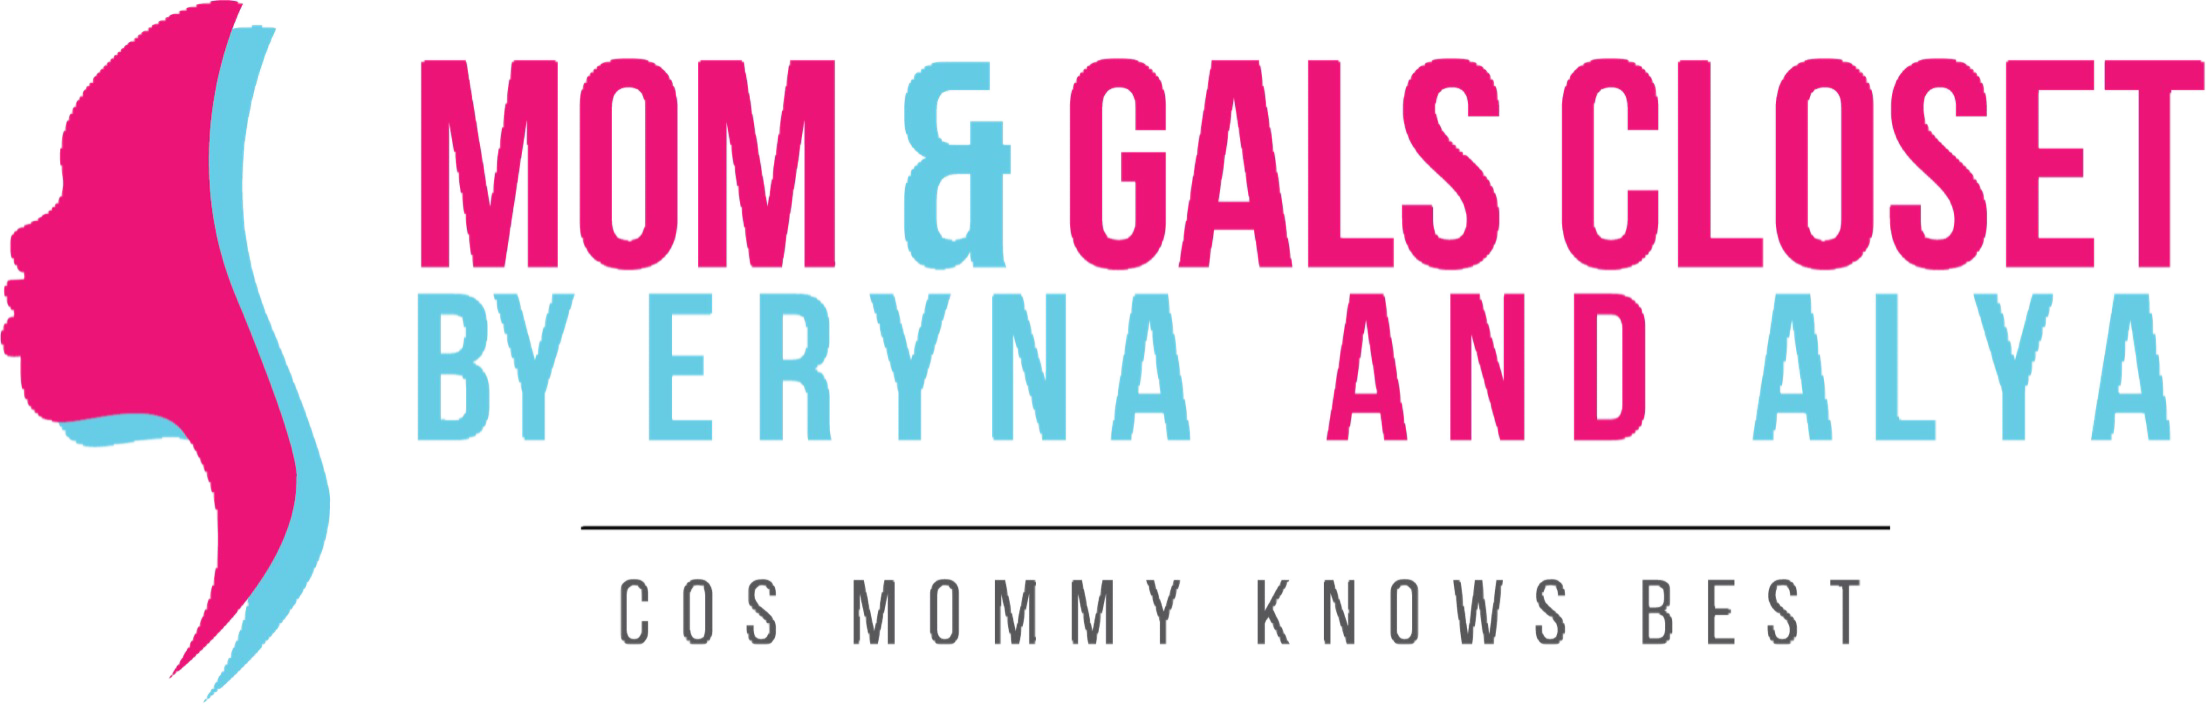 Mom & Gals Closet By Eryna And Alya